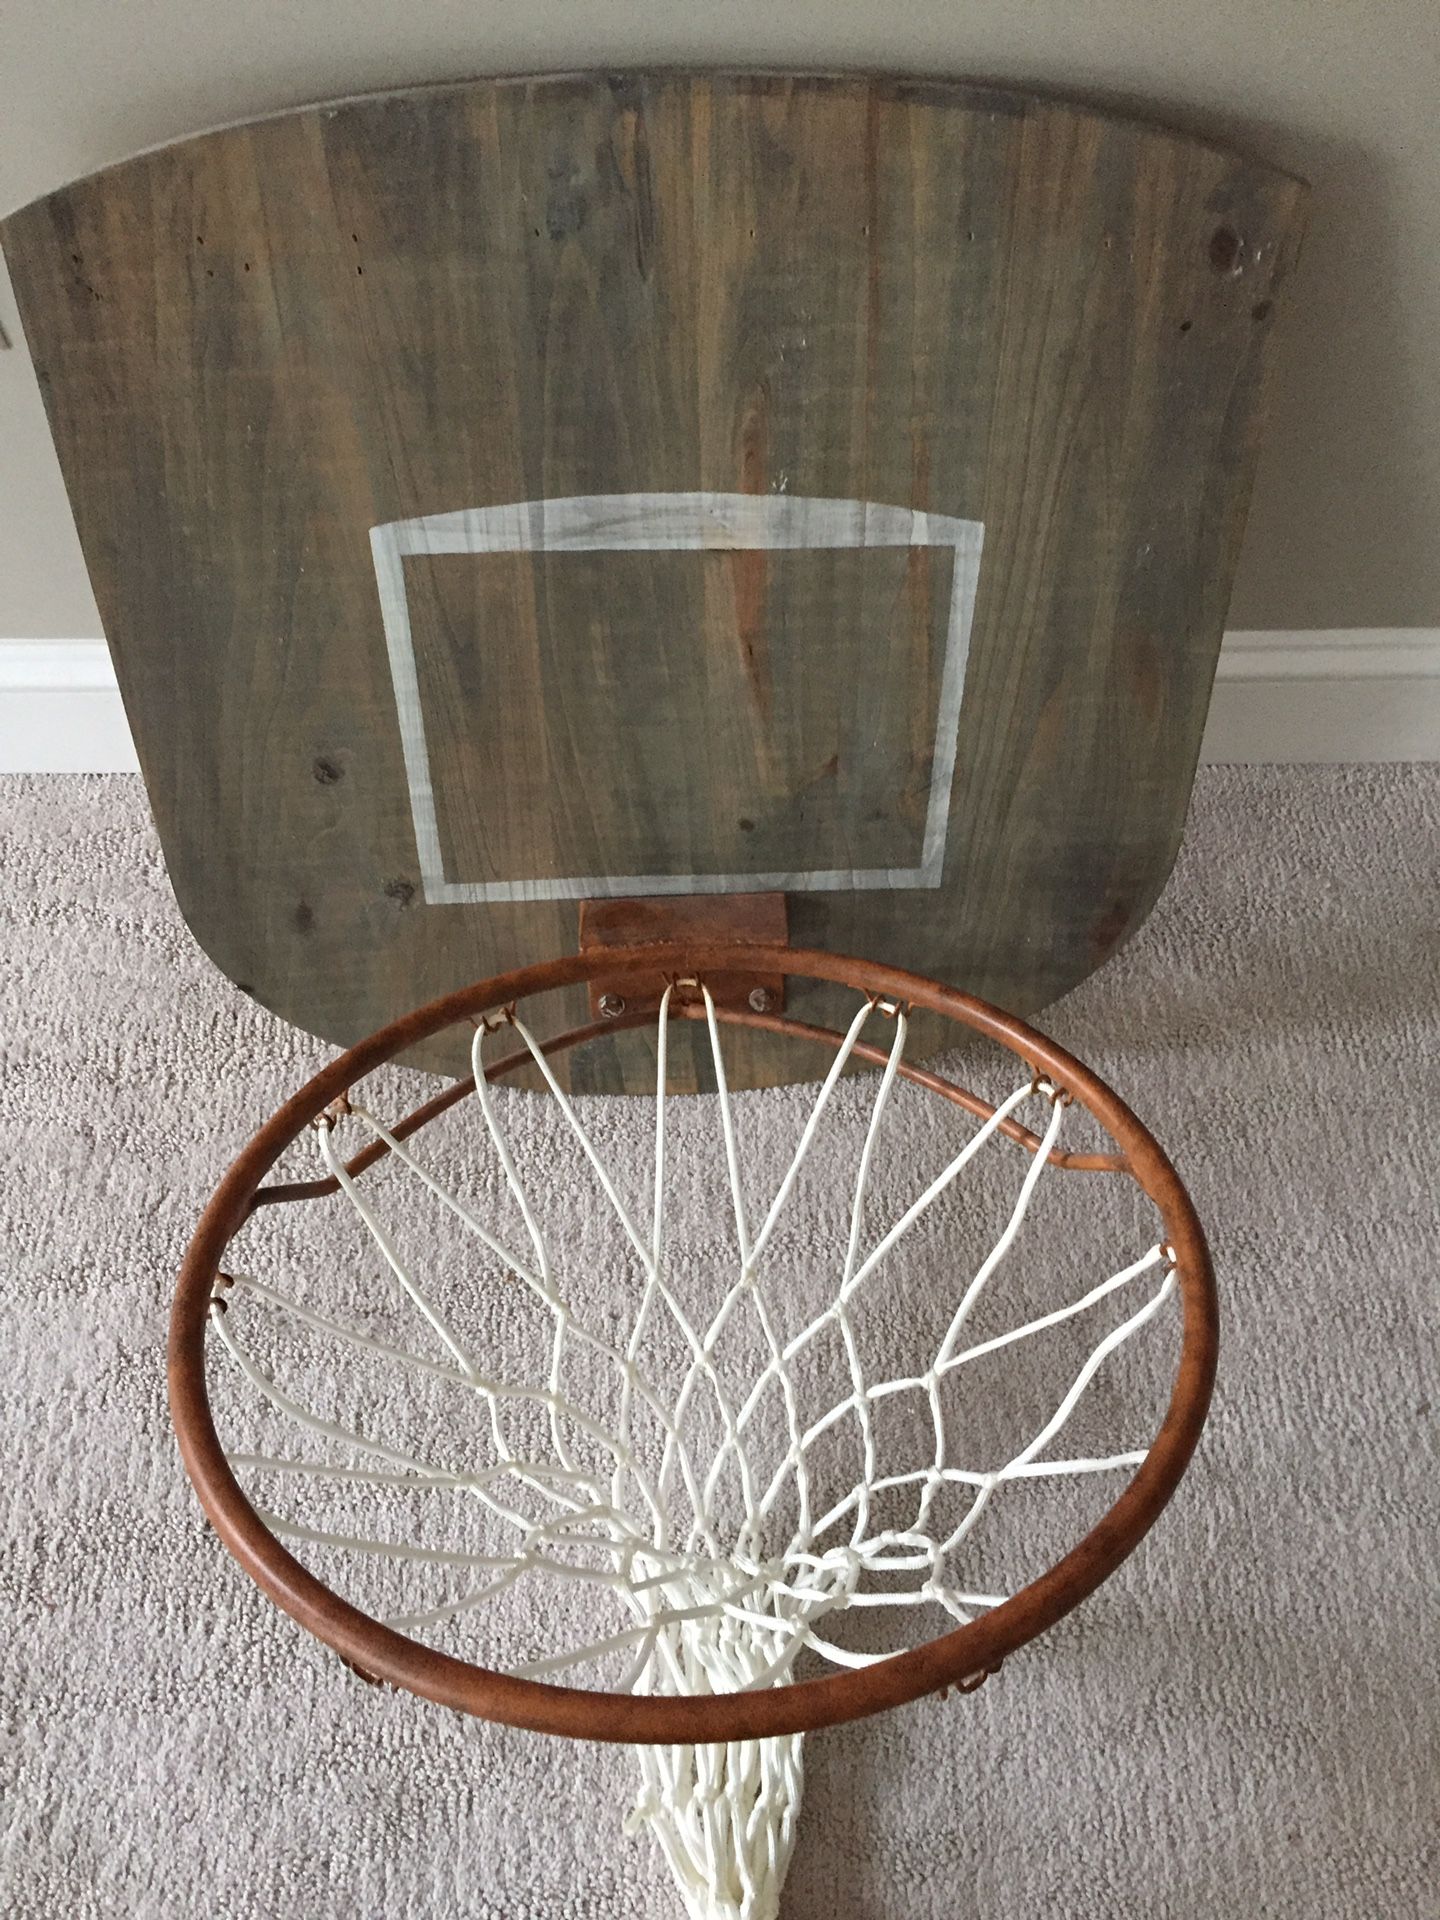 Pottery barn basketball hoop